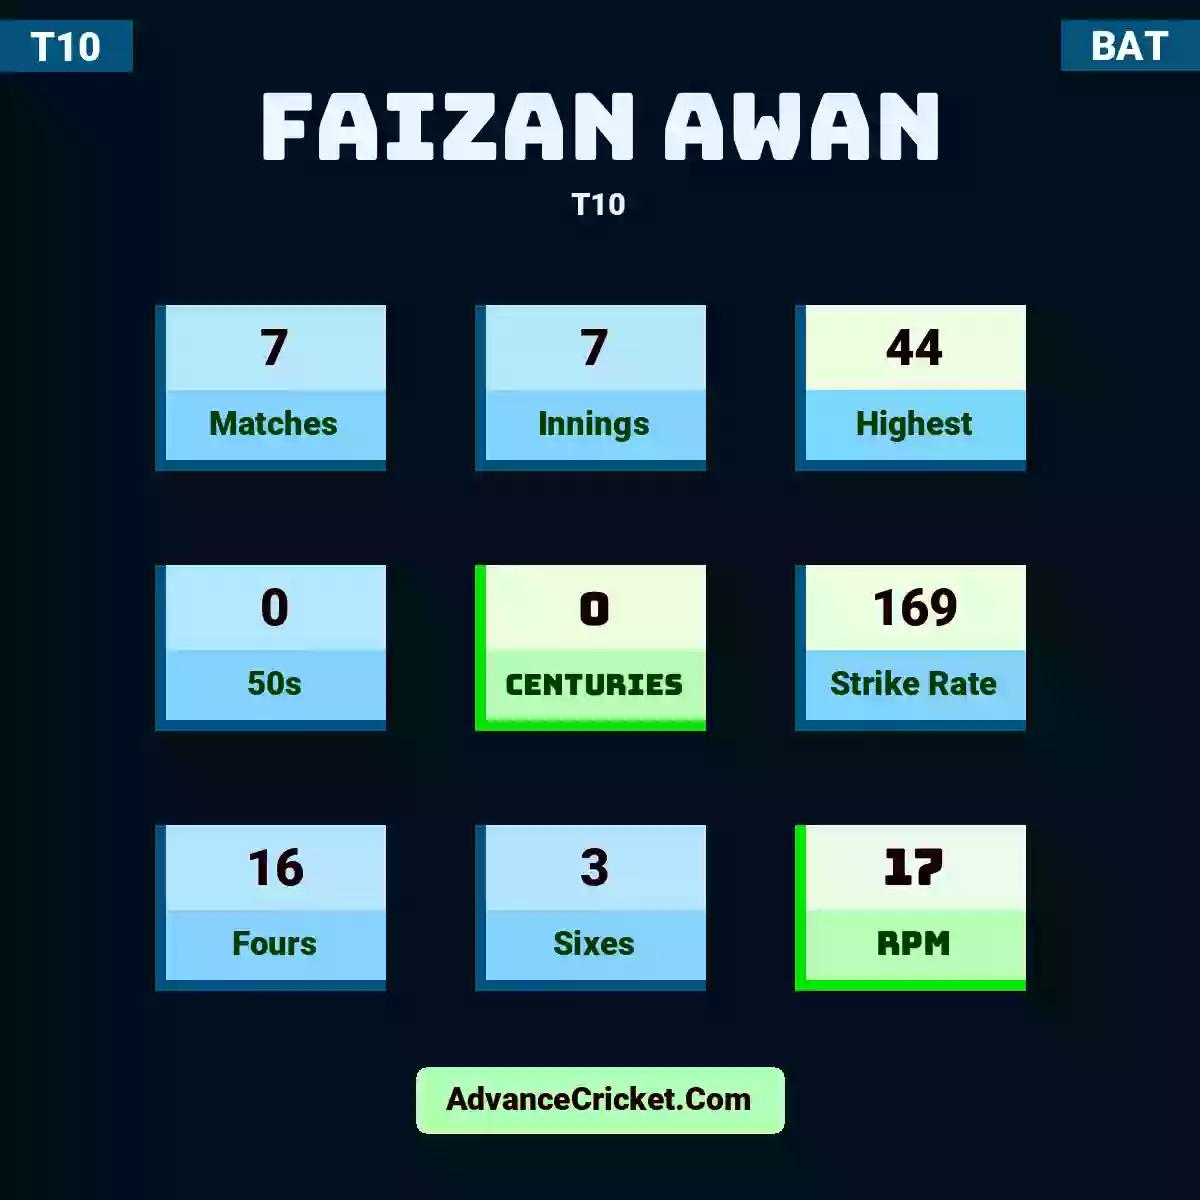 Faizan Awan T10 , Faizan Awan played 7 matches, scored 44 runs as highest, 0 half-centuries, and 0 centuries, with a strike rate of 169. F.Awan hit 16 fours and 3 sixes, with an RPM of 17.